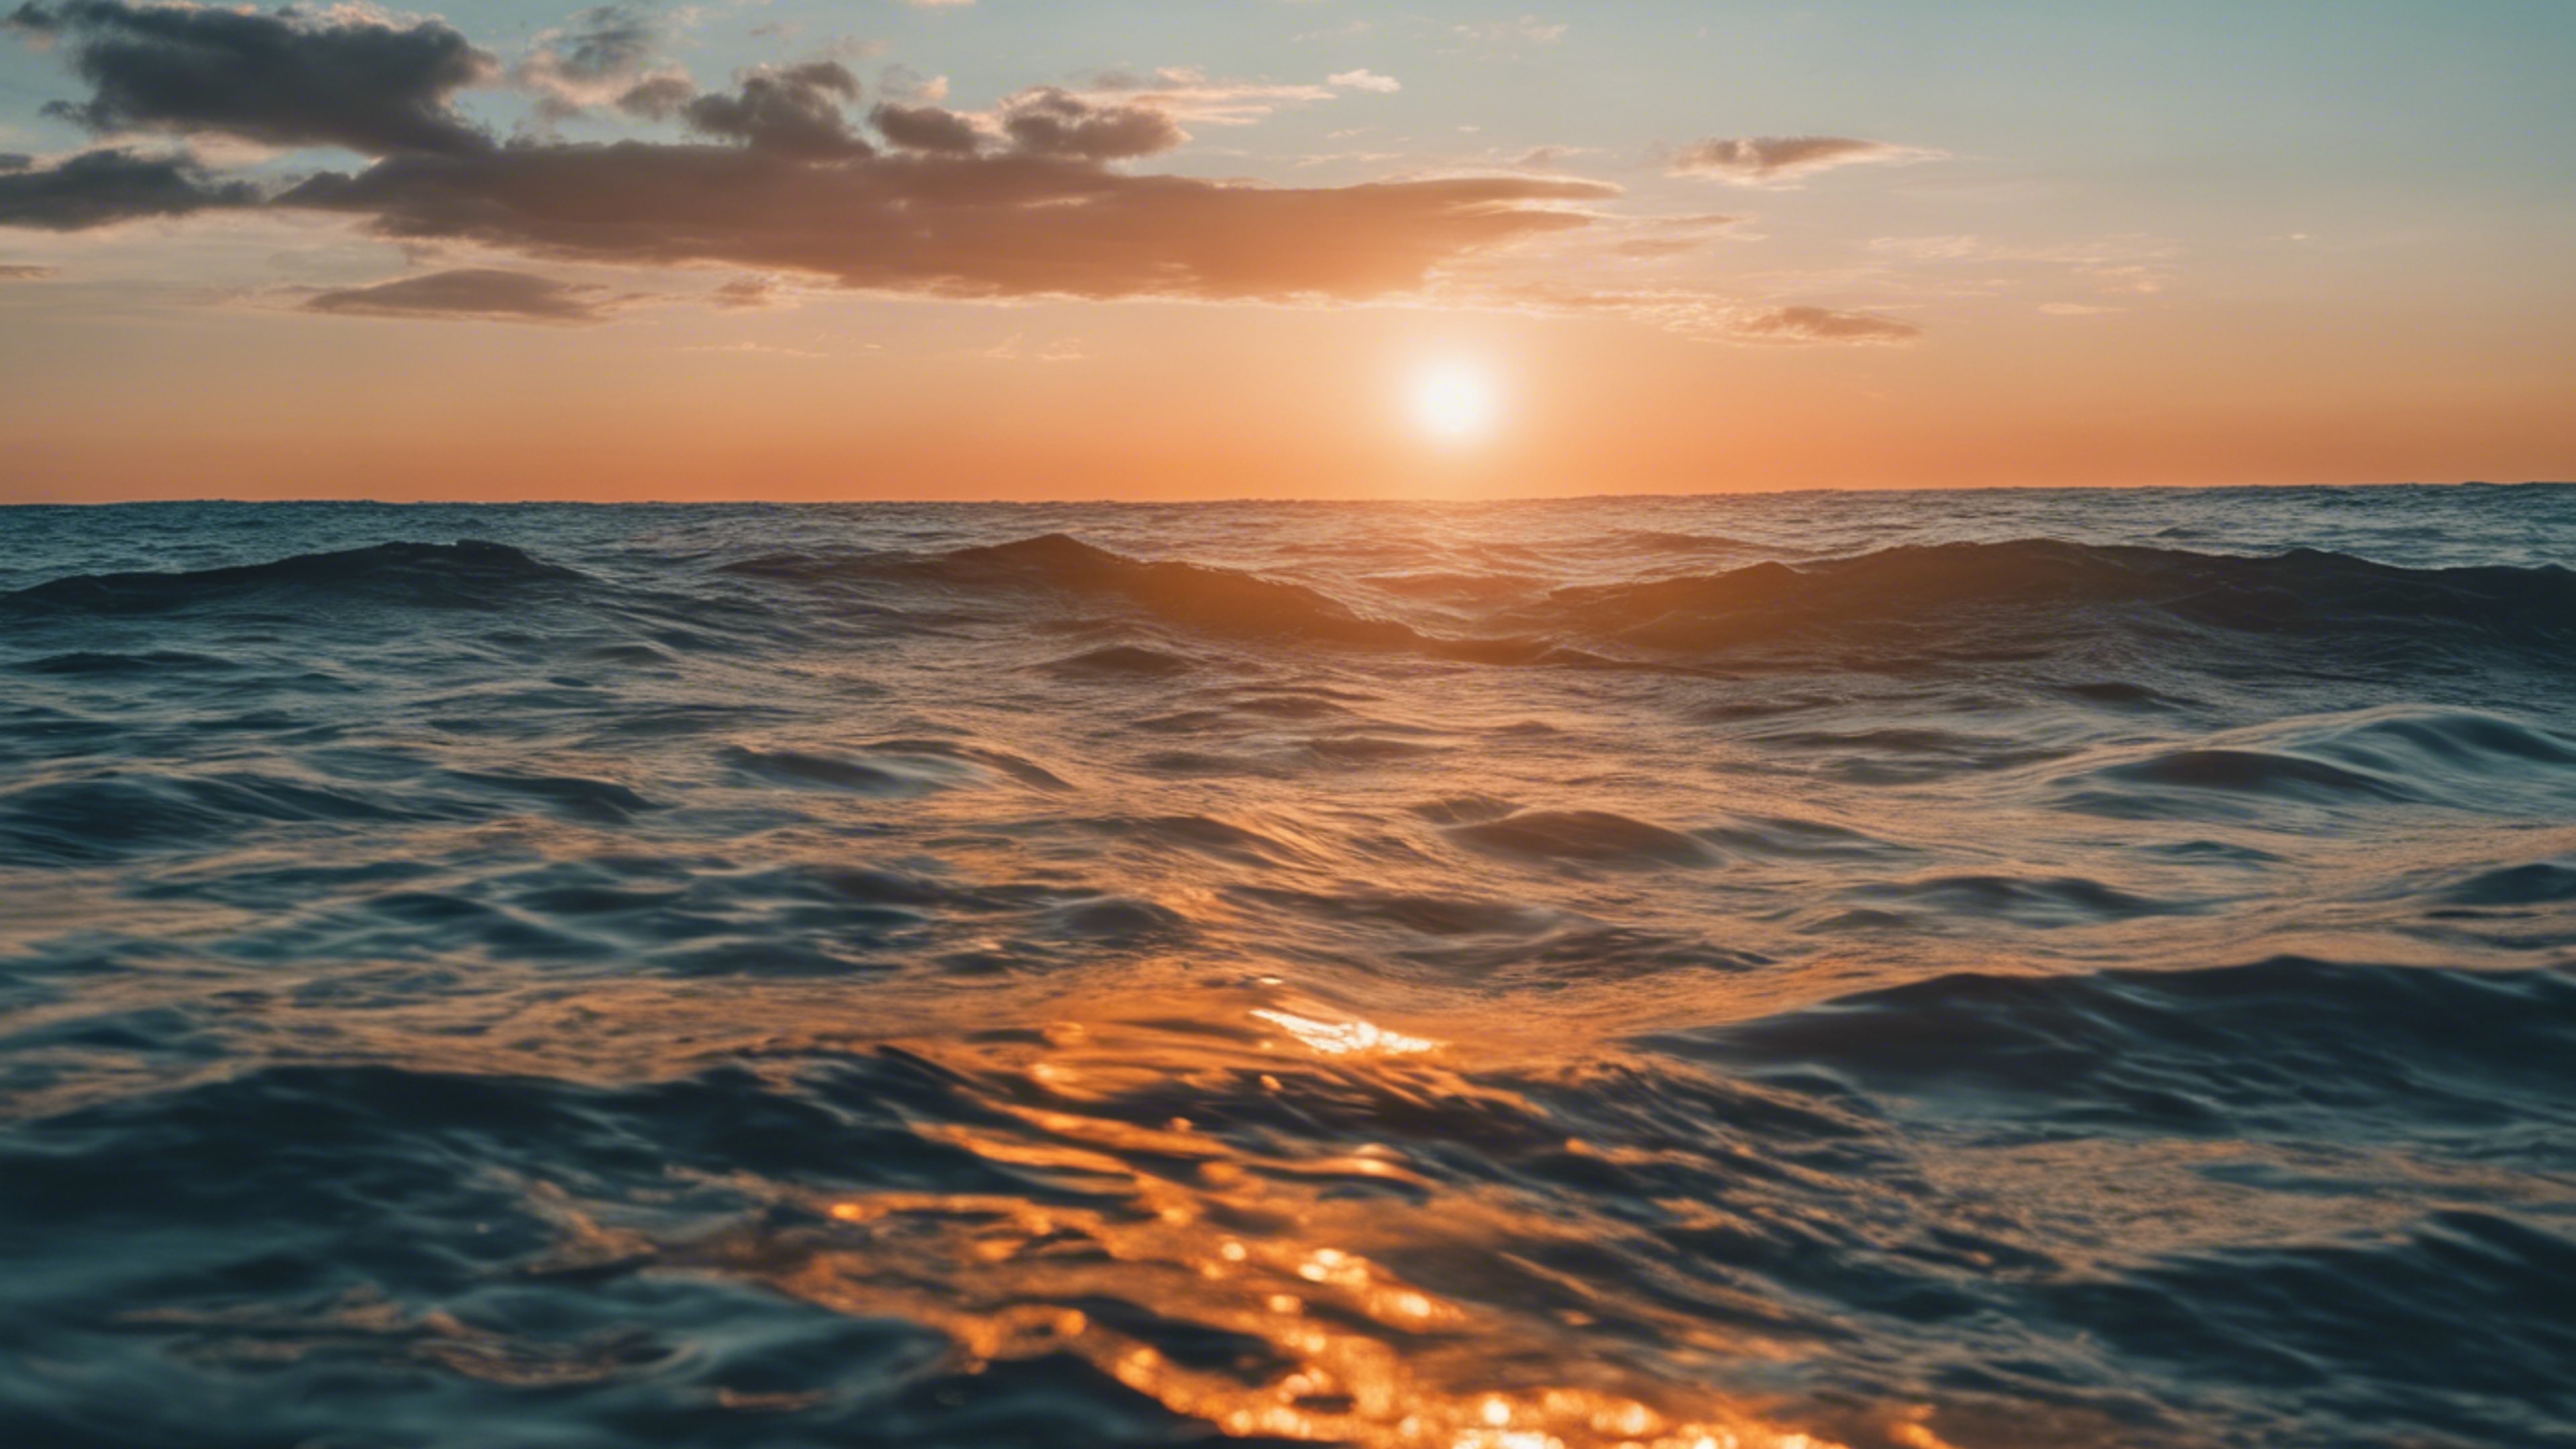 A sunset scene with orange sun setting in the cool blue ocean. Tapeta[7965154be6e2421b8d94]